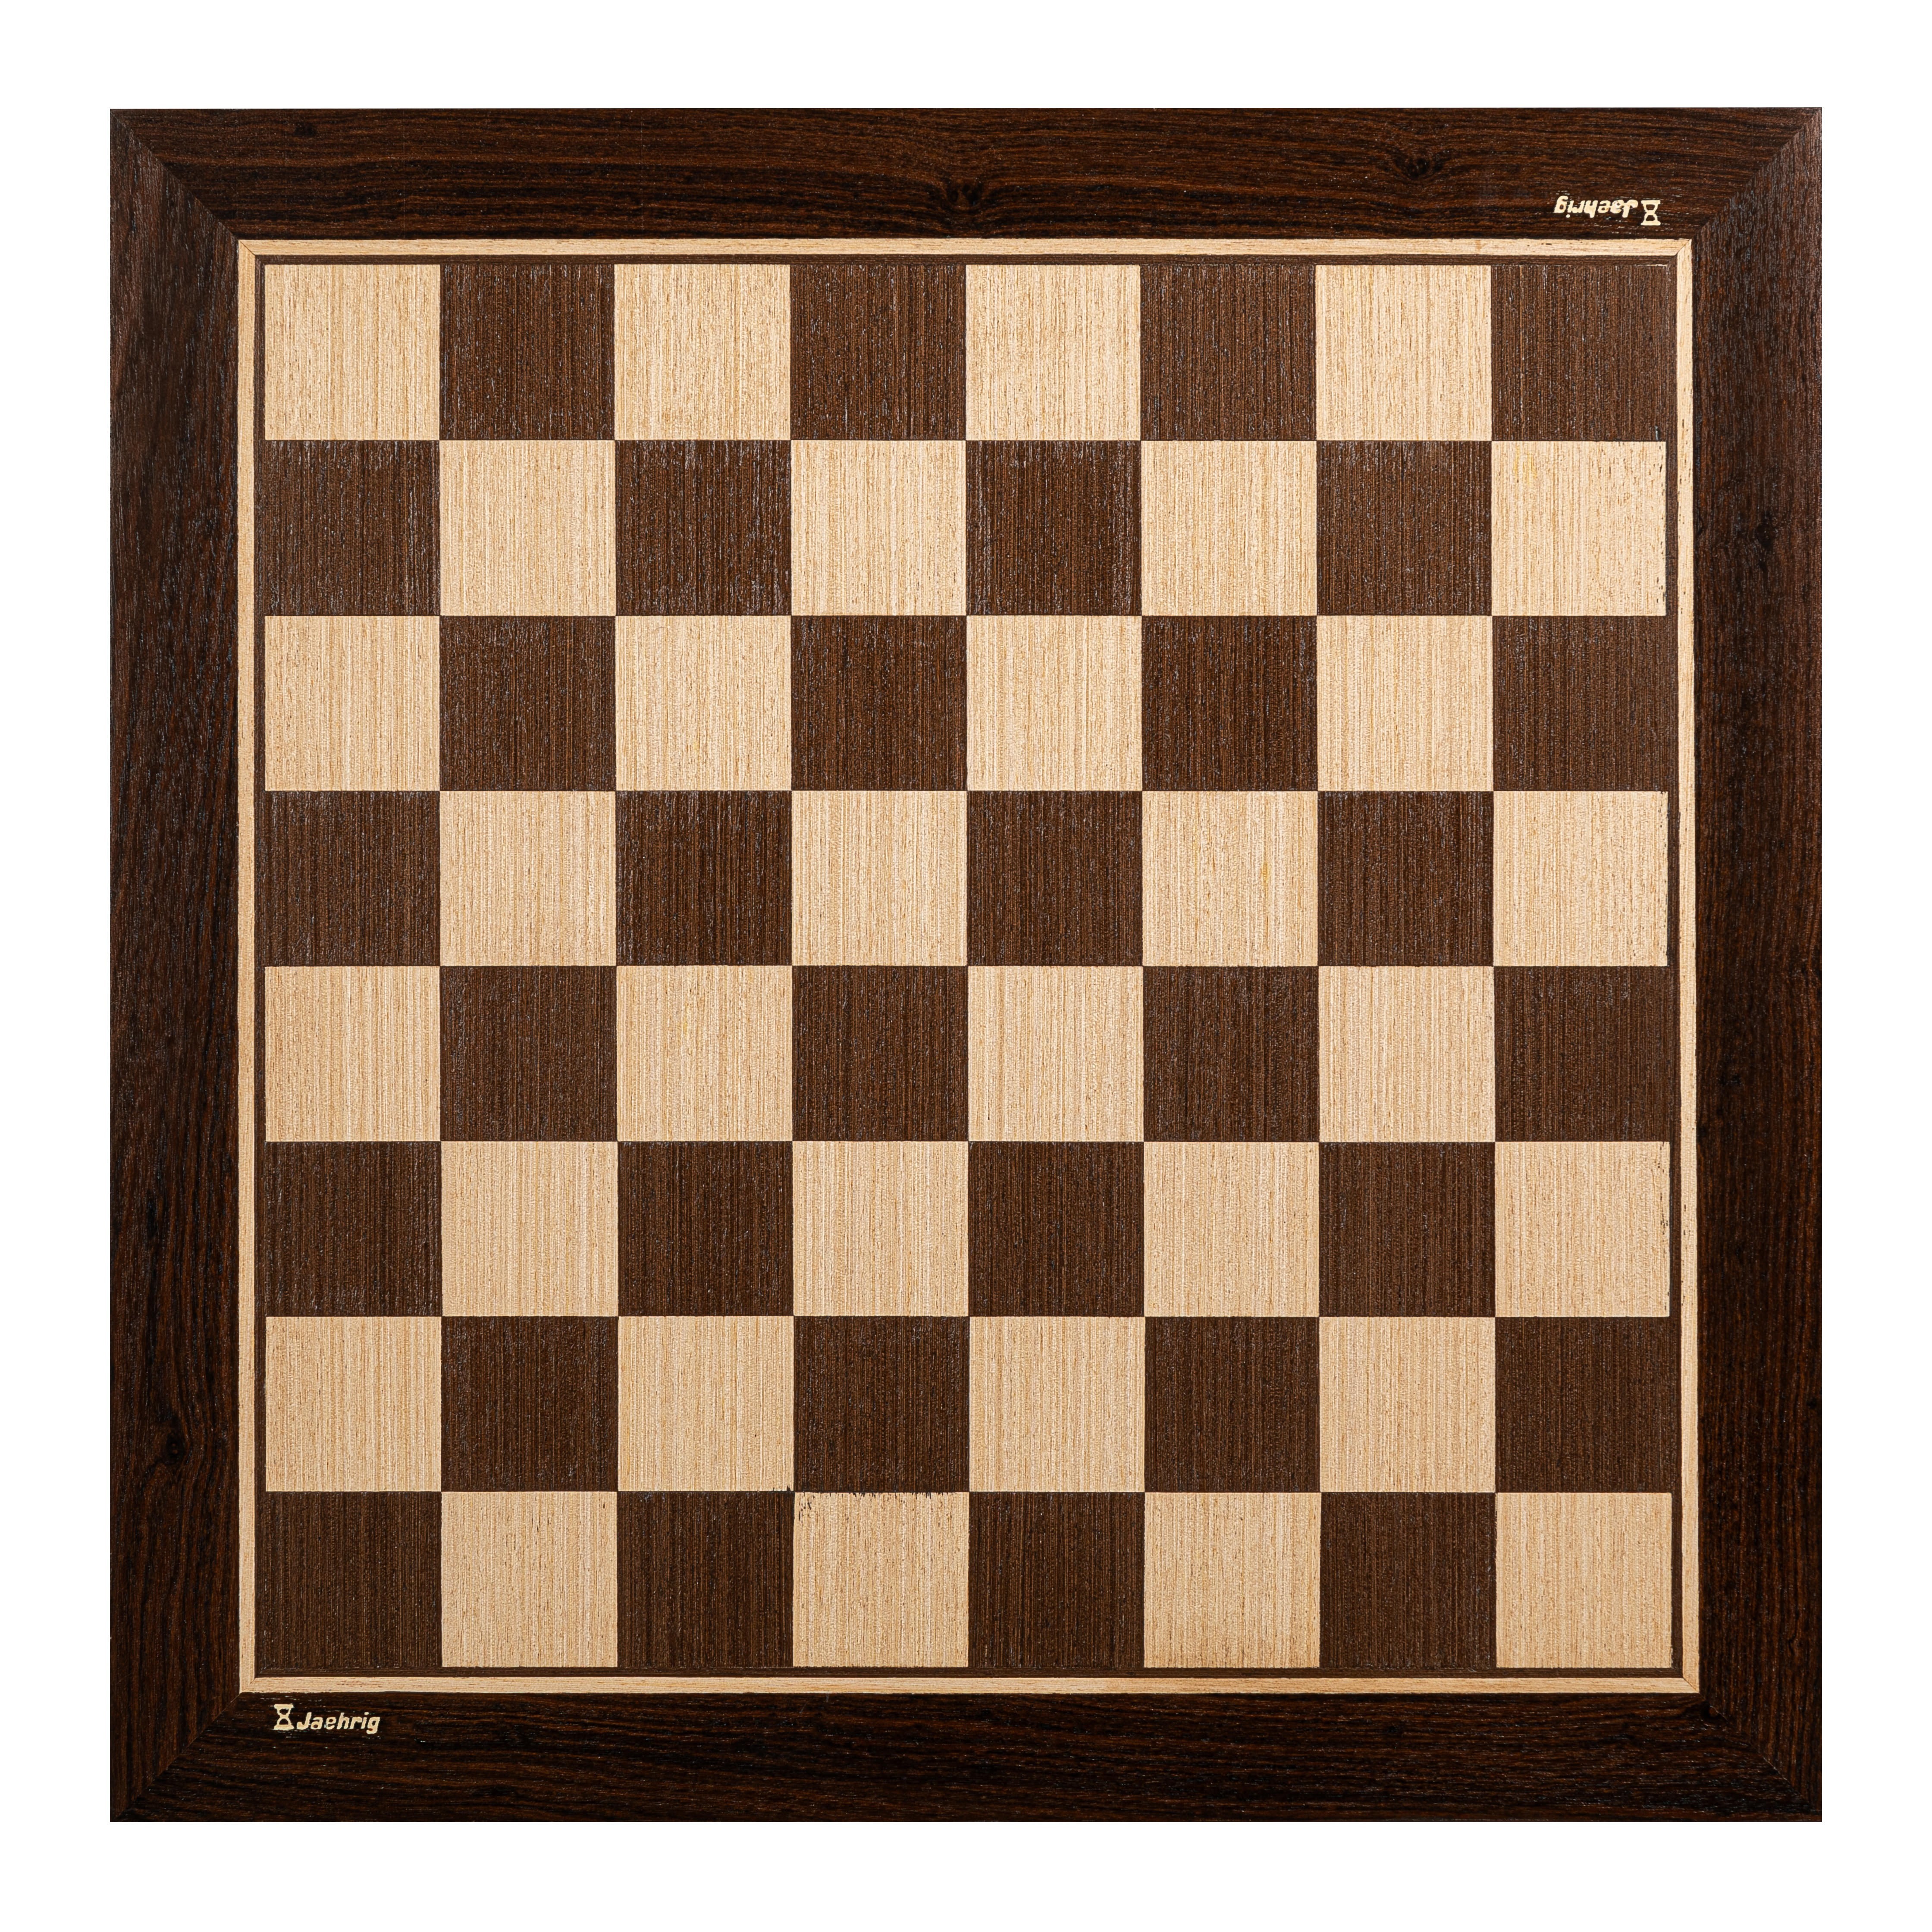 Jogo de xadrez oriental, tabuleiro em madeira marchetad